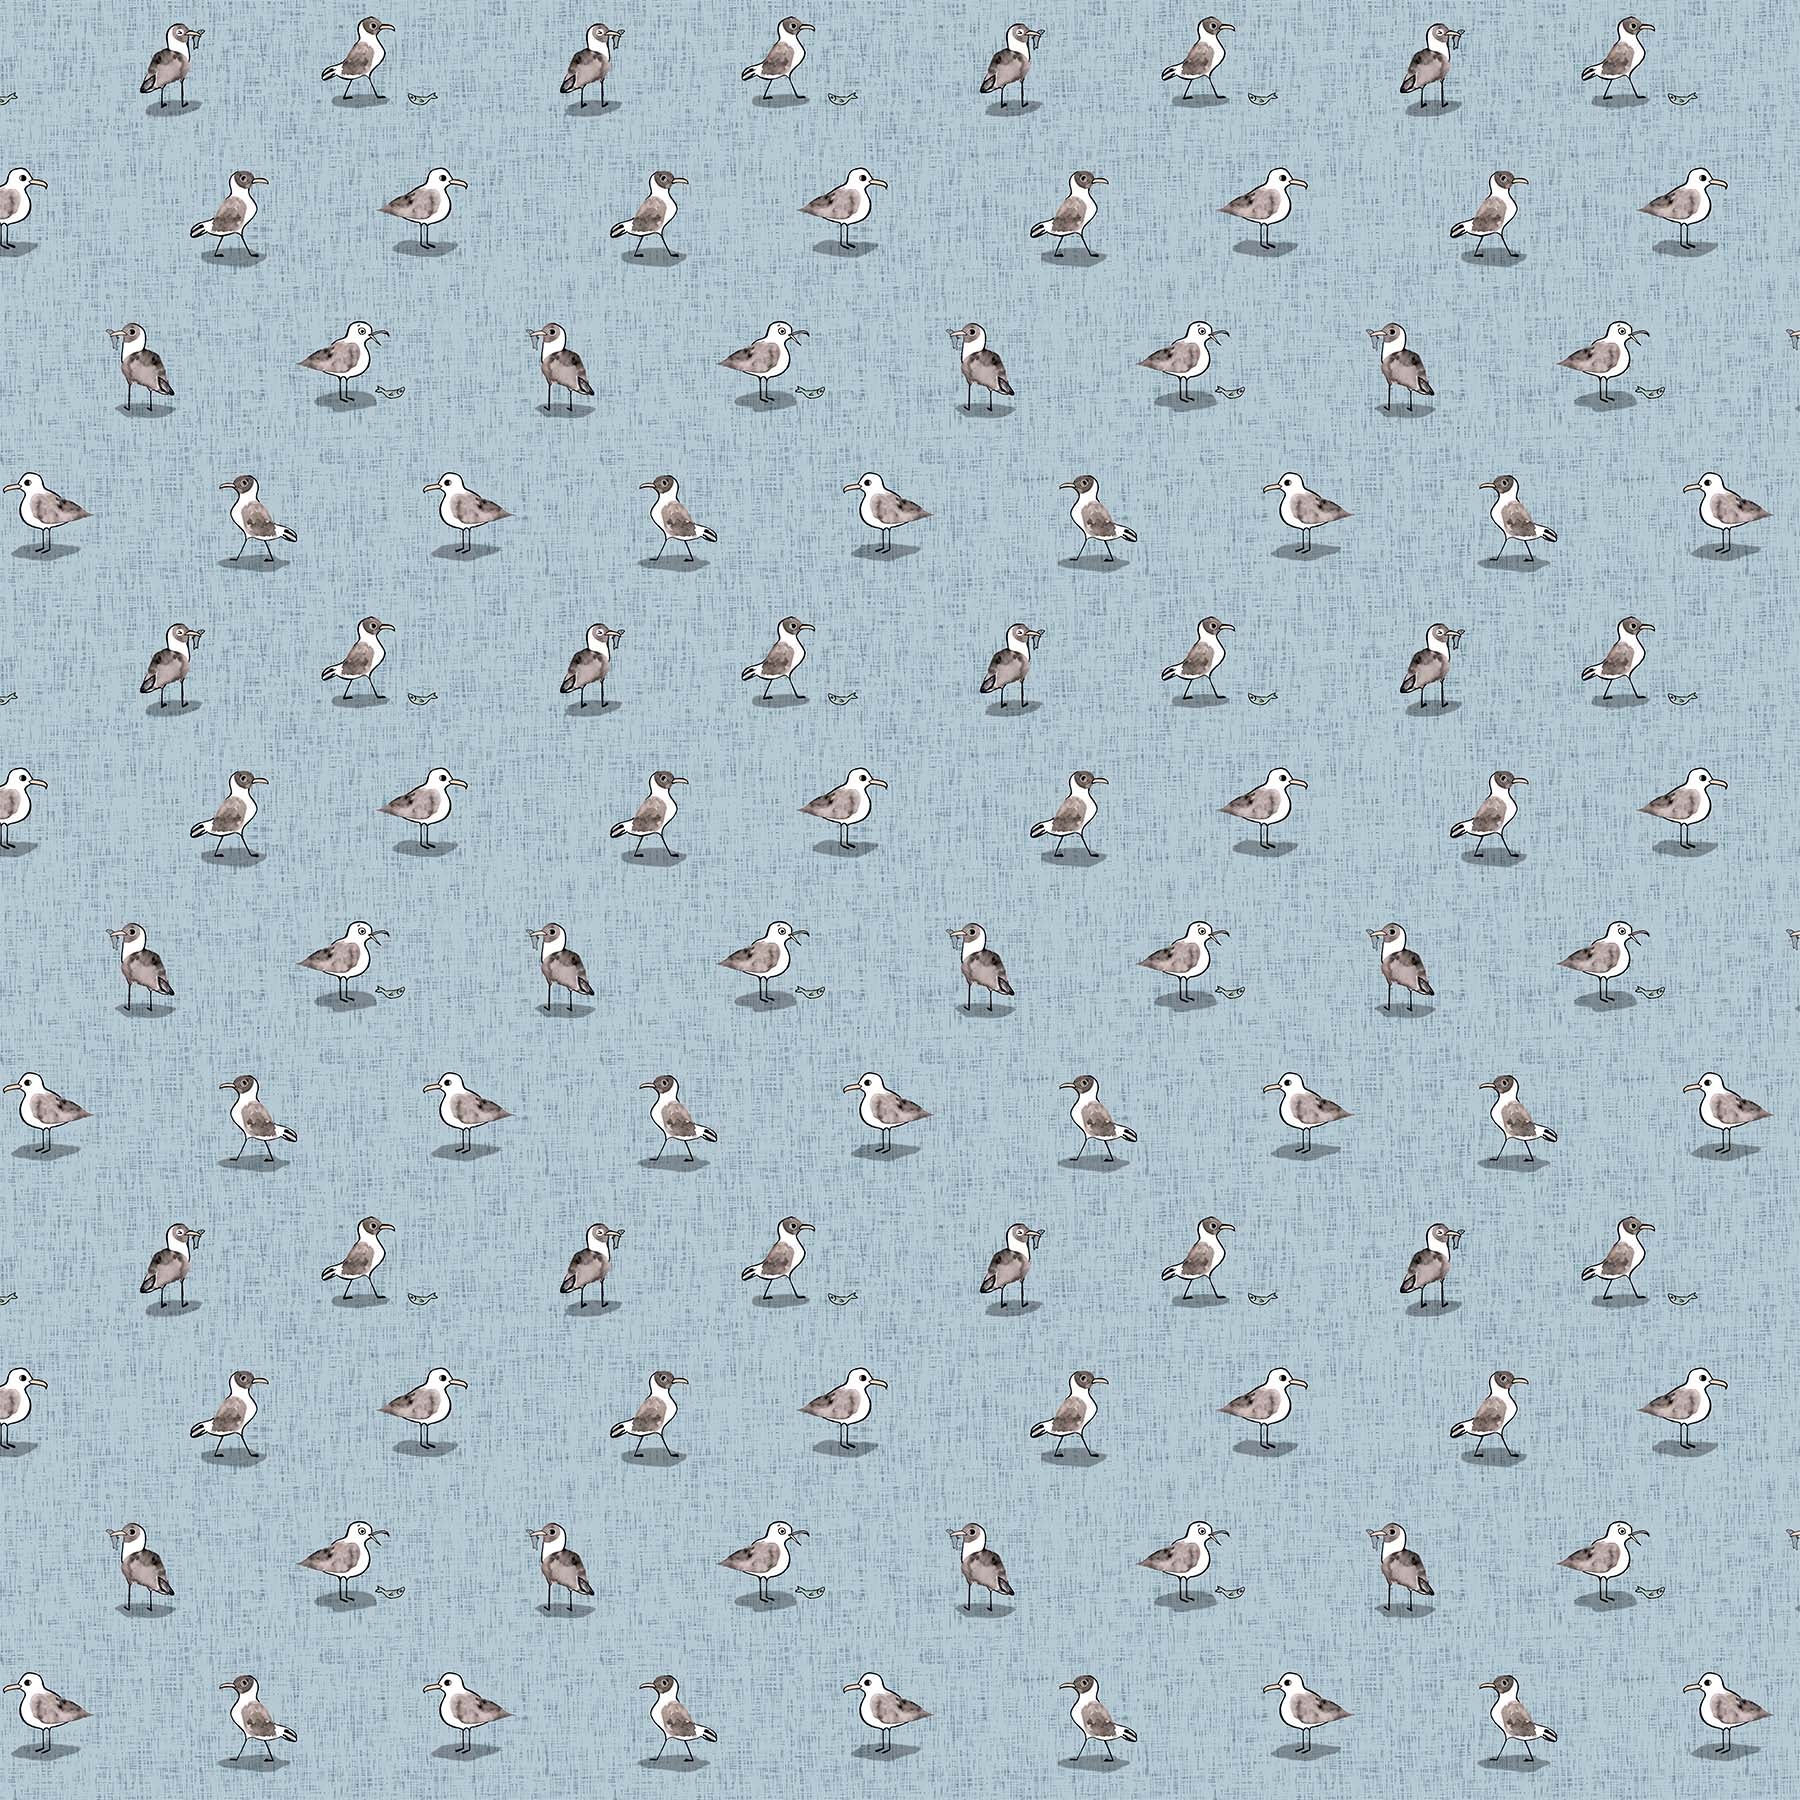 Fabric, Calm Waters, Seagulls, 90611-40